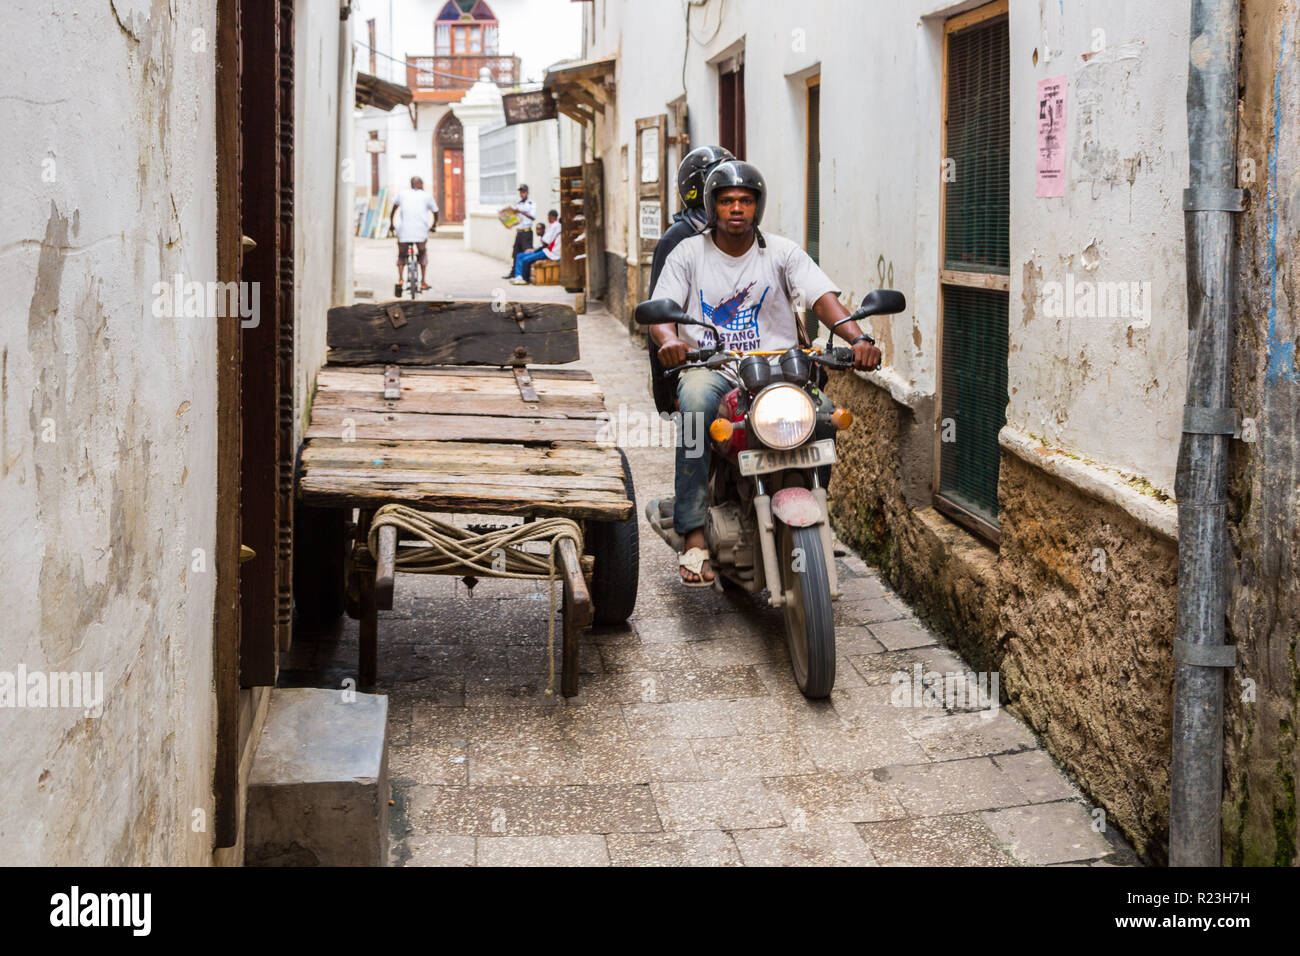 Two local men driving a motorcycle through narrow streets of Stone Town, old colonial center of Zanzibar City, Unguja island, Tanzania. Stock Photo